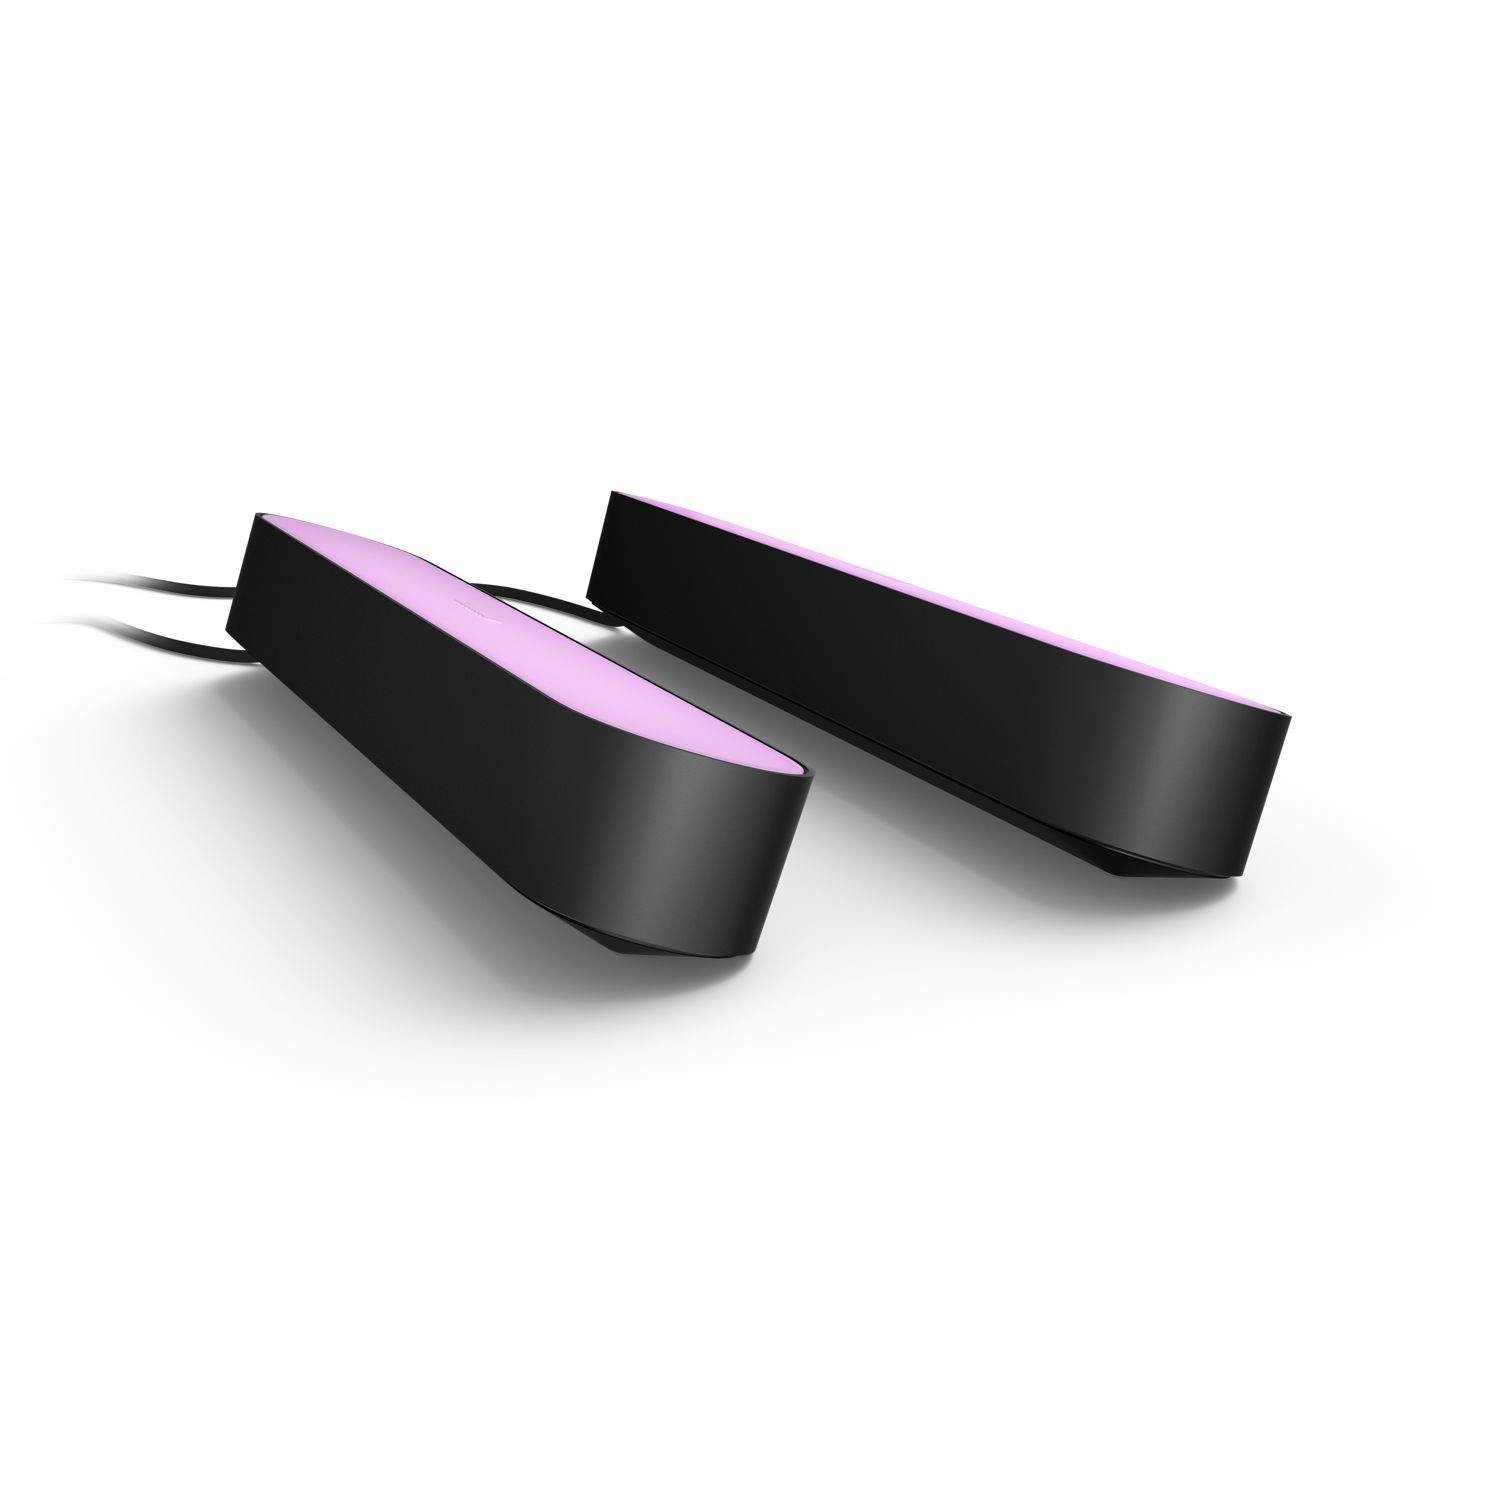 Bundle: Hue sync box + 2x Play light bars | Philips Hue US